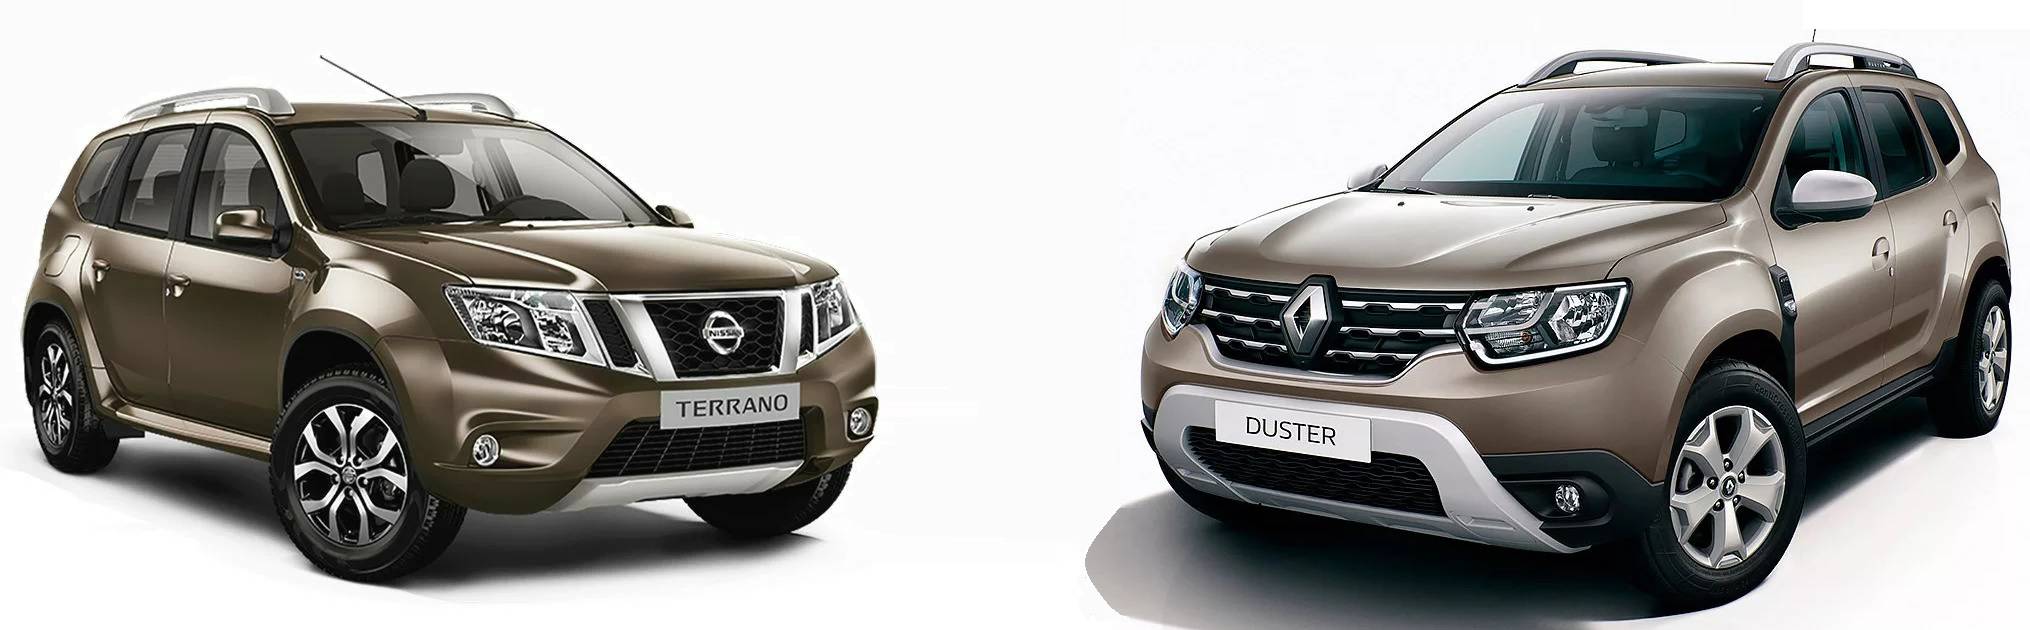 Renault duster и nissan terrano — чем они отличаются